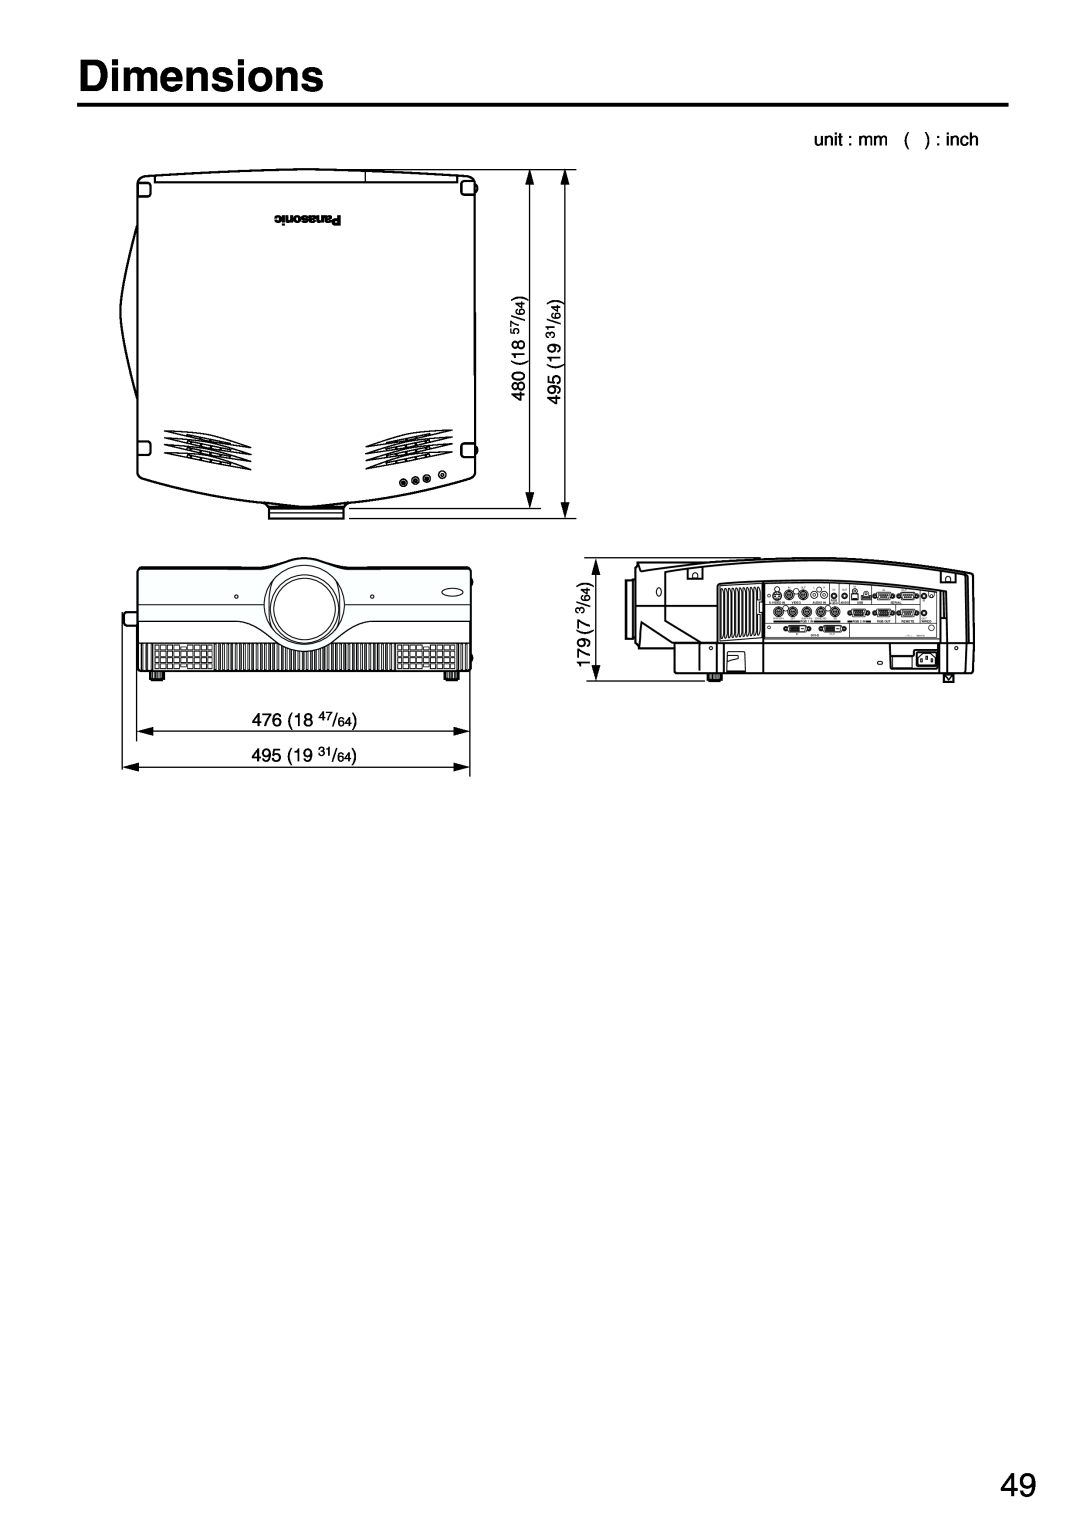 Panasonic PT-L6510U manual Dimensions, 7179 476 18 47/64 495 19 31/64, unit mm inch 